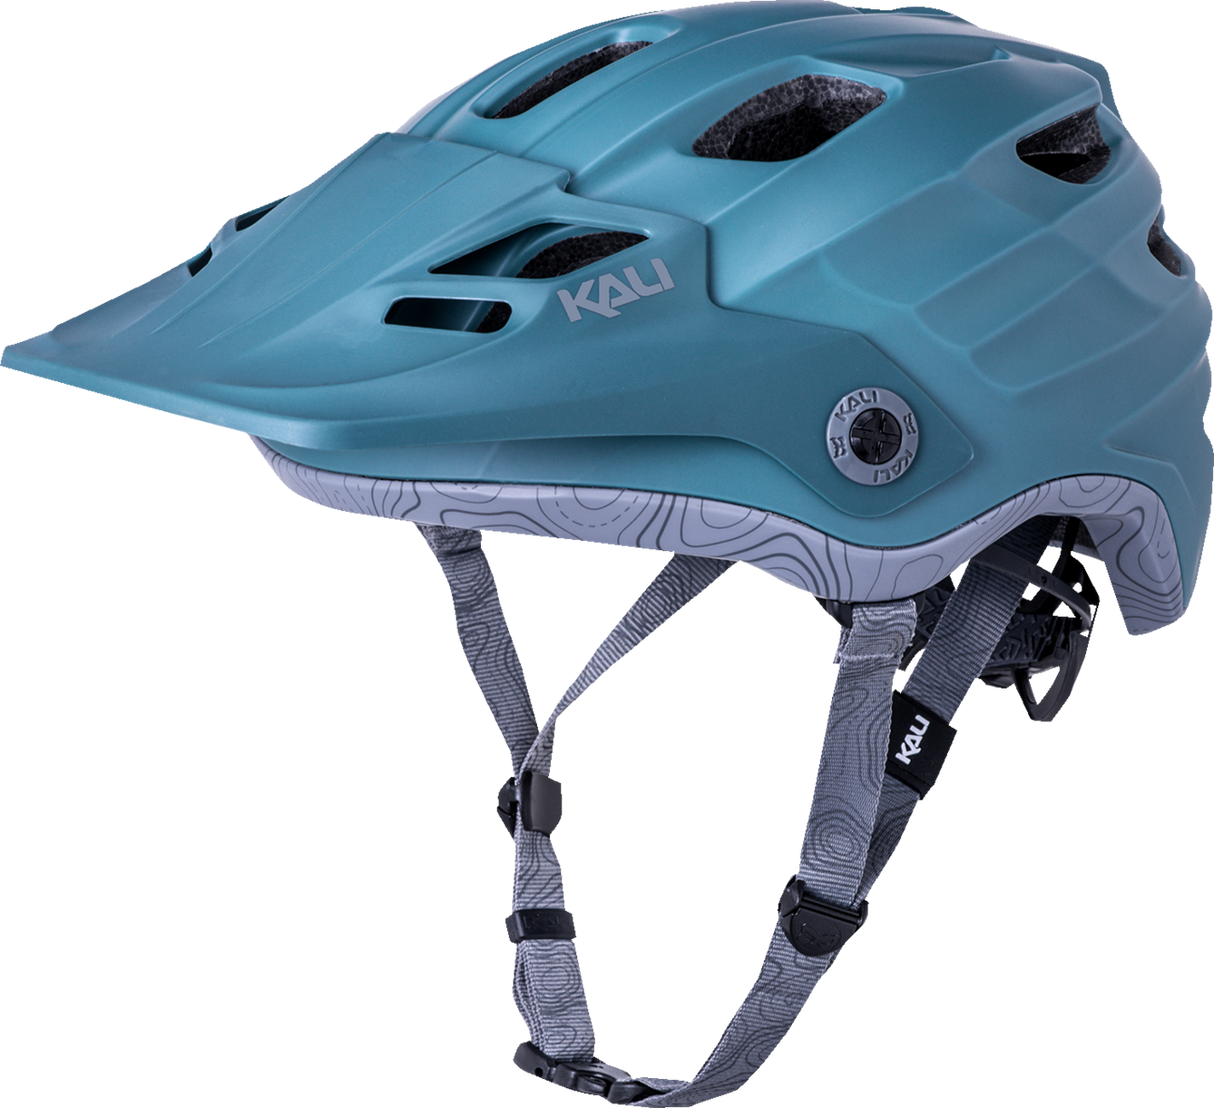 KALI Maya 3.0 Helmet - Solid - Matte Moss/Silver - S/M 0220421136